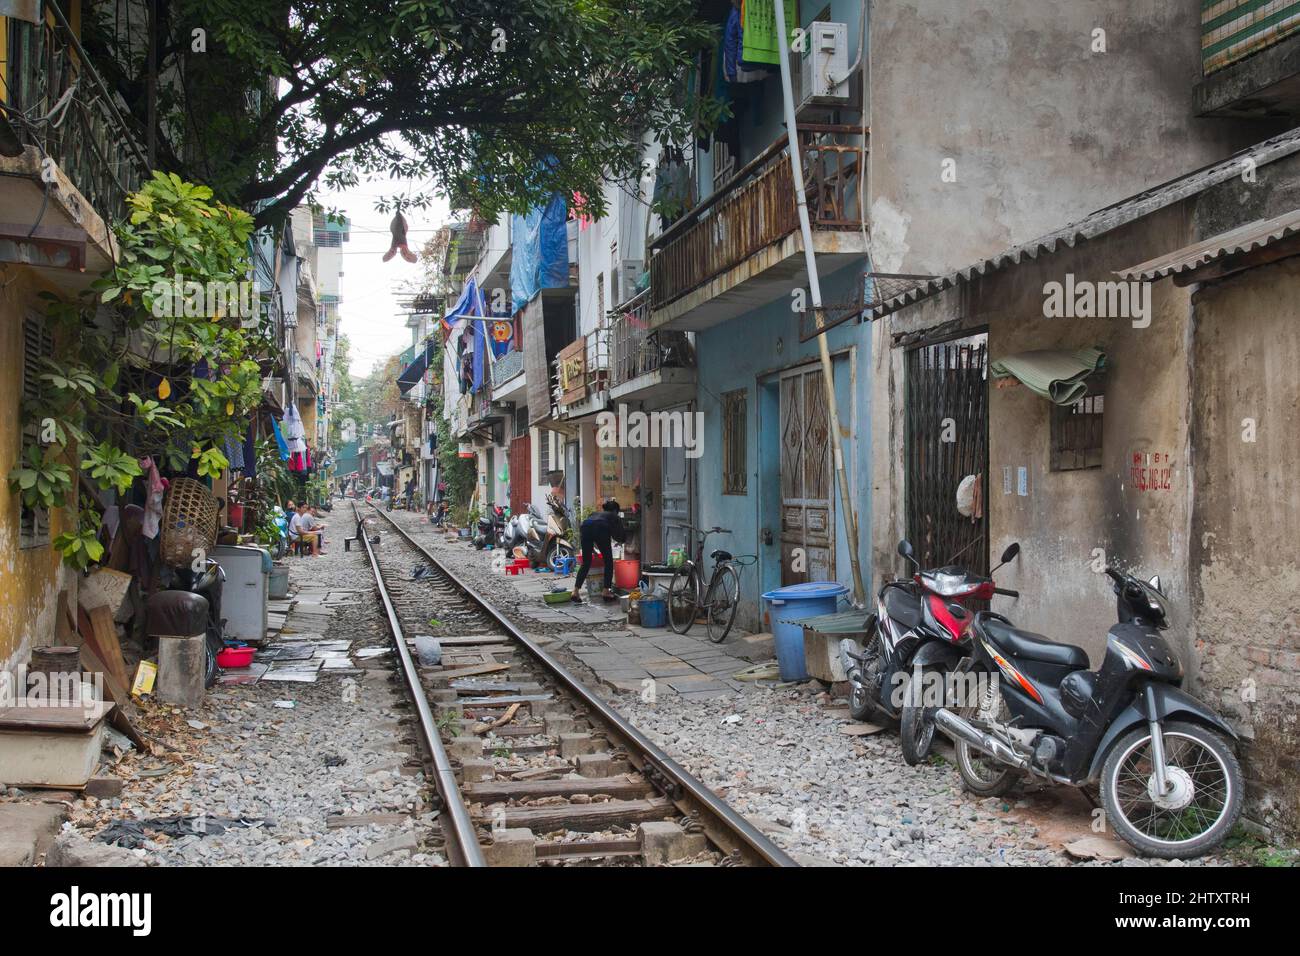 Railway line between houses, Hanoi, Vietnam Stock Photo